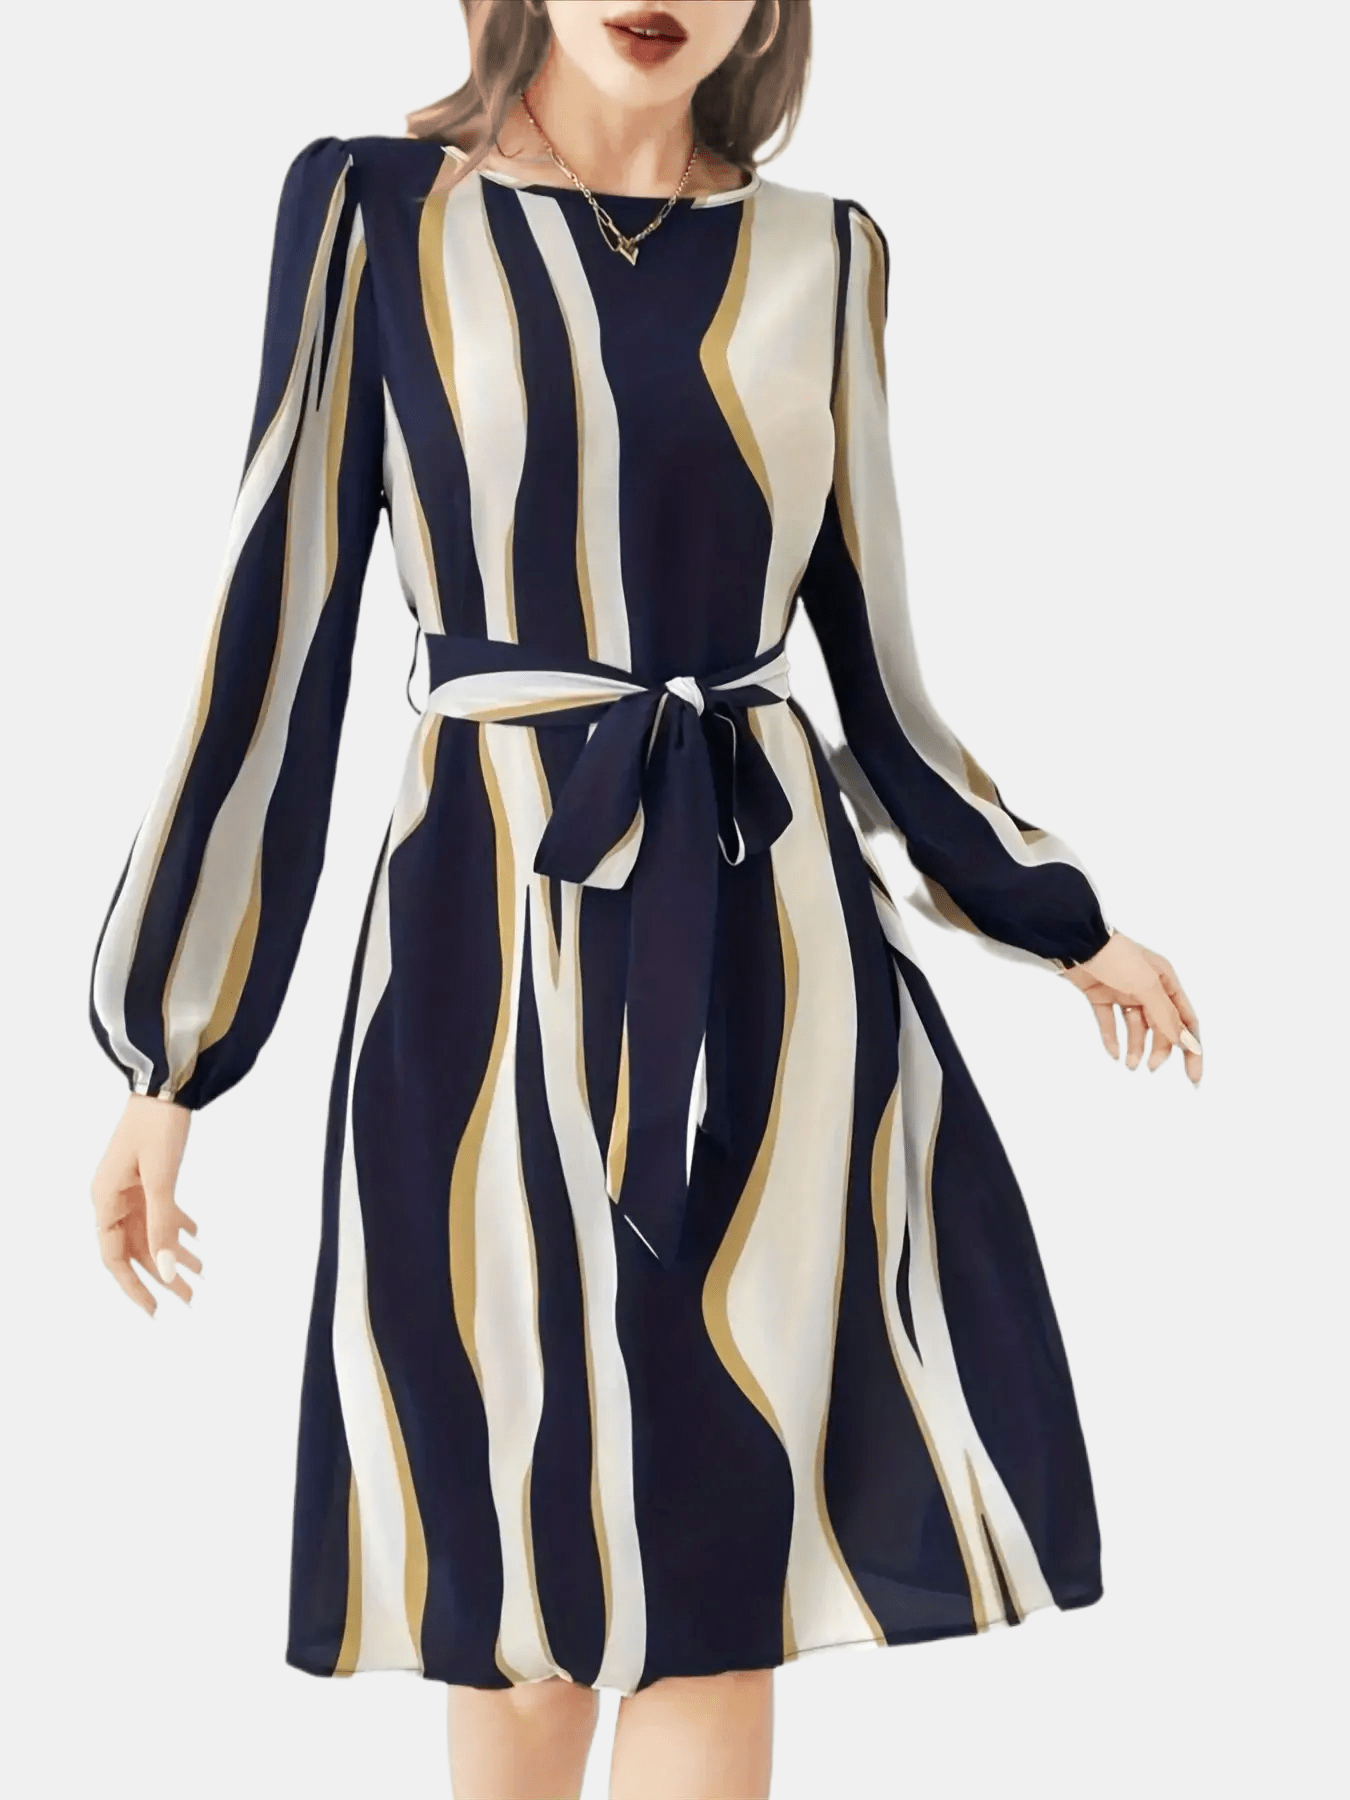 xieyinshe  Wavy Stripe Print Dress, Casual Keyhole Long Sleeve Dress, Women's Clothing